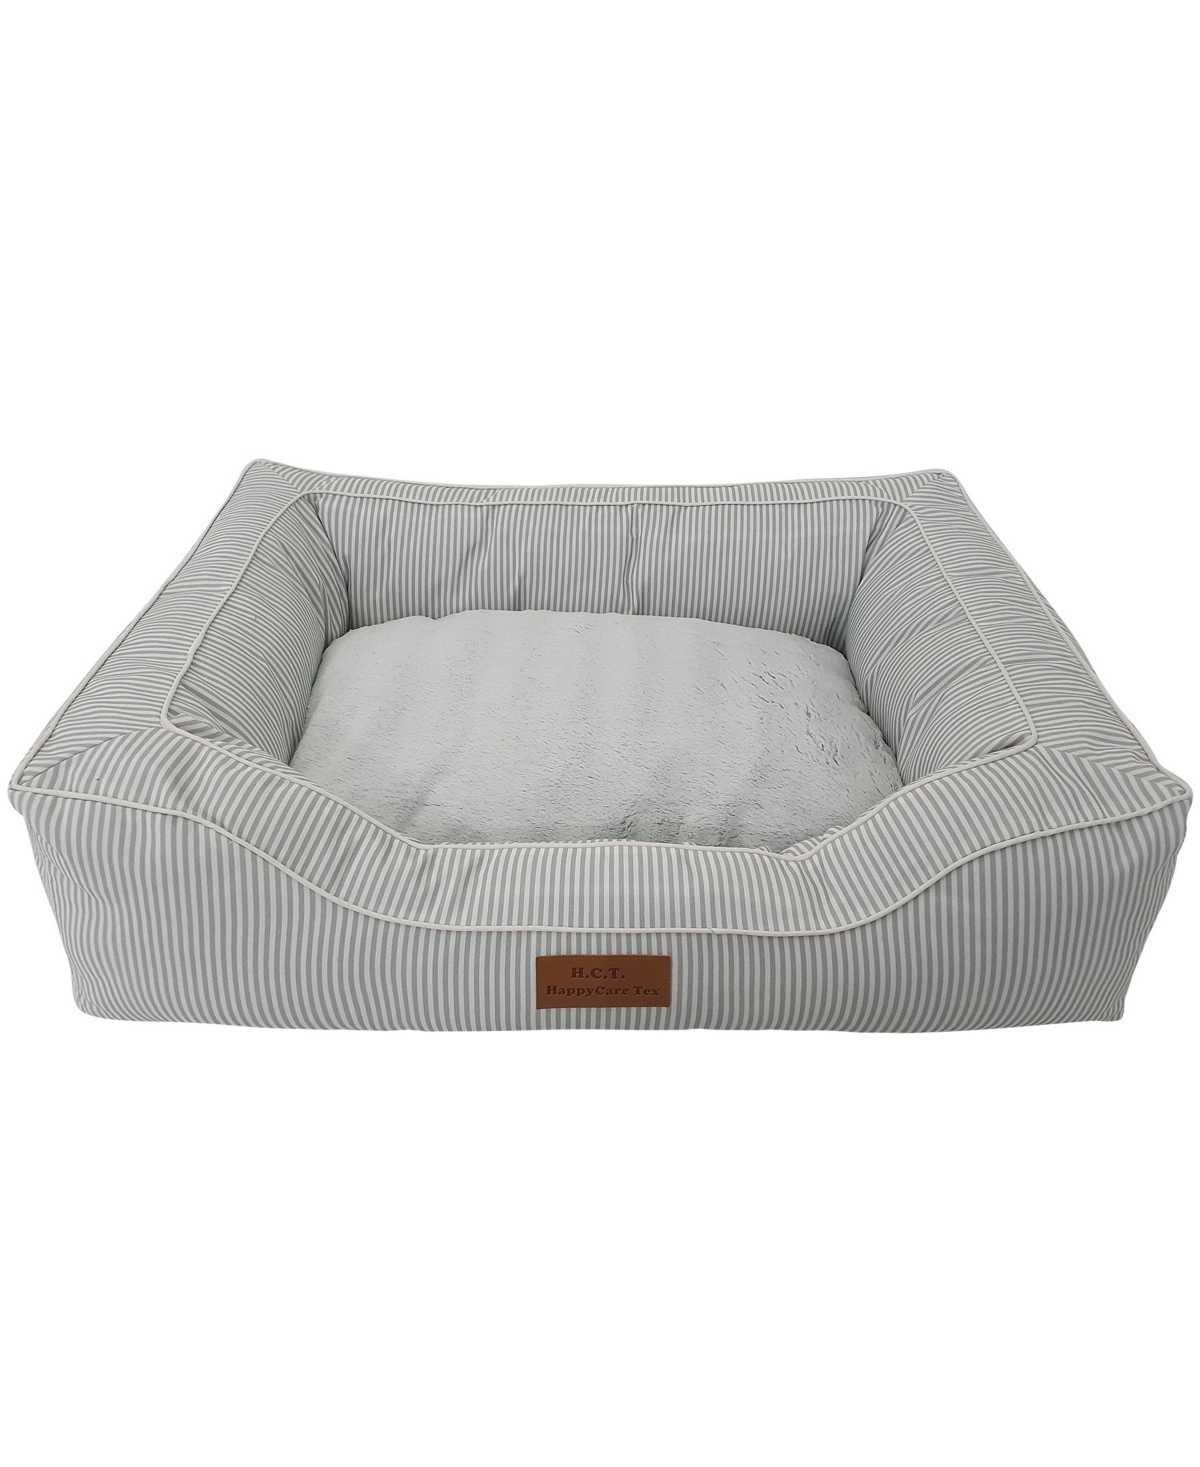 Canvas Rectangle Pet Bed, Medium - Stripe Gray